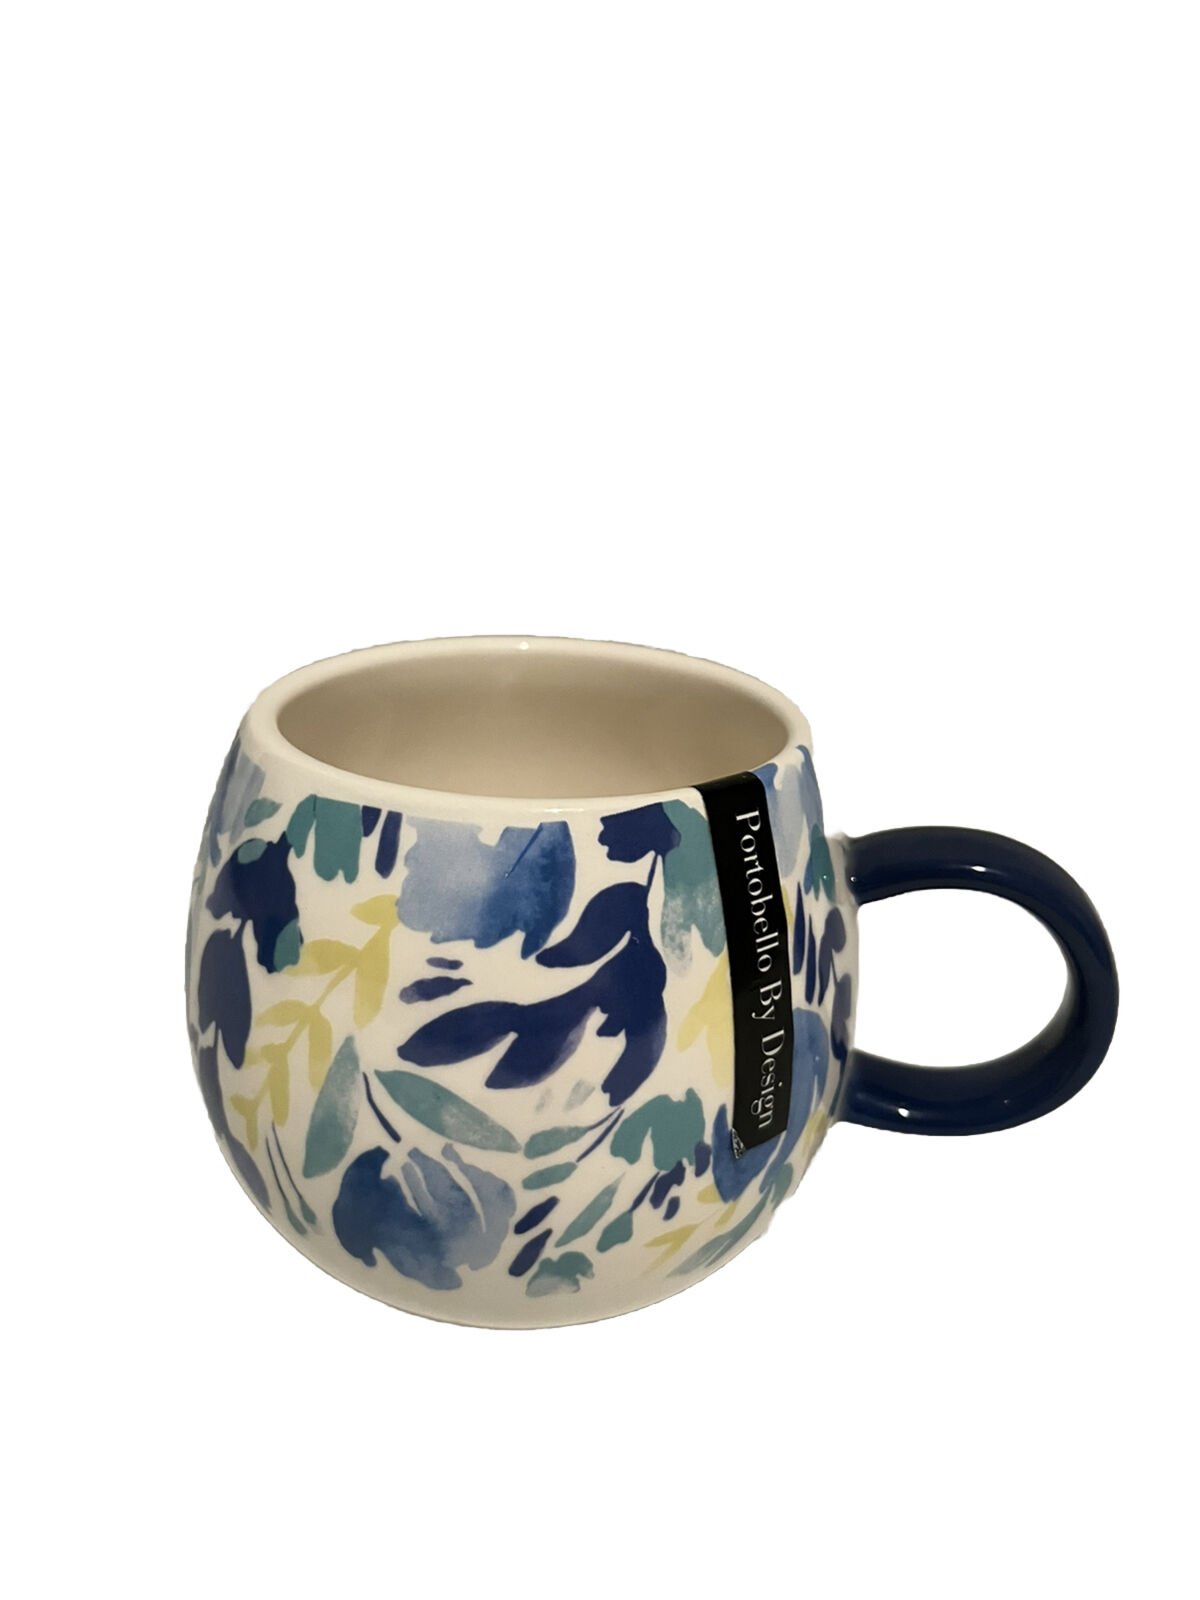 Portobello by Design Blue Yellow Floral Springtime Stoneware Coffee Mug England